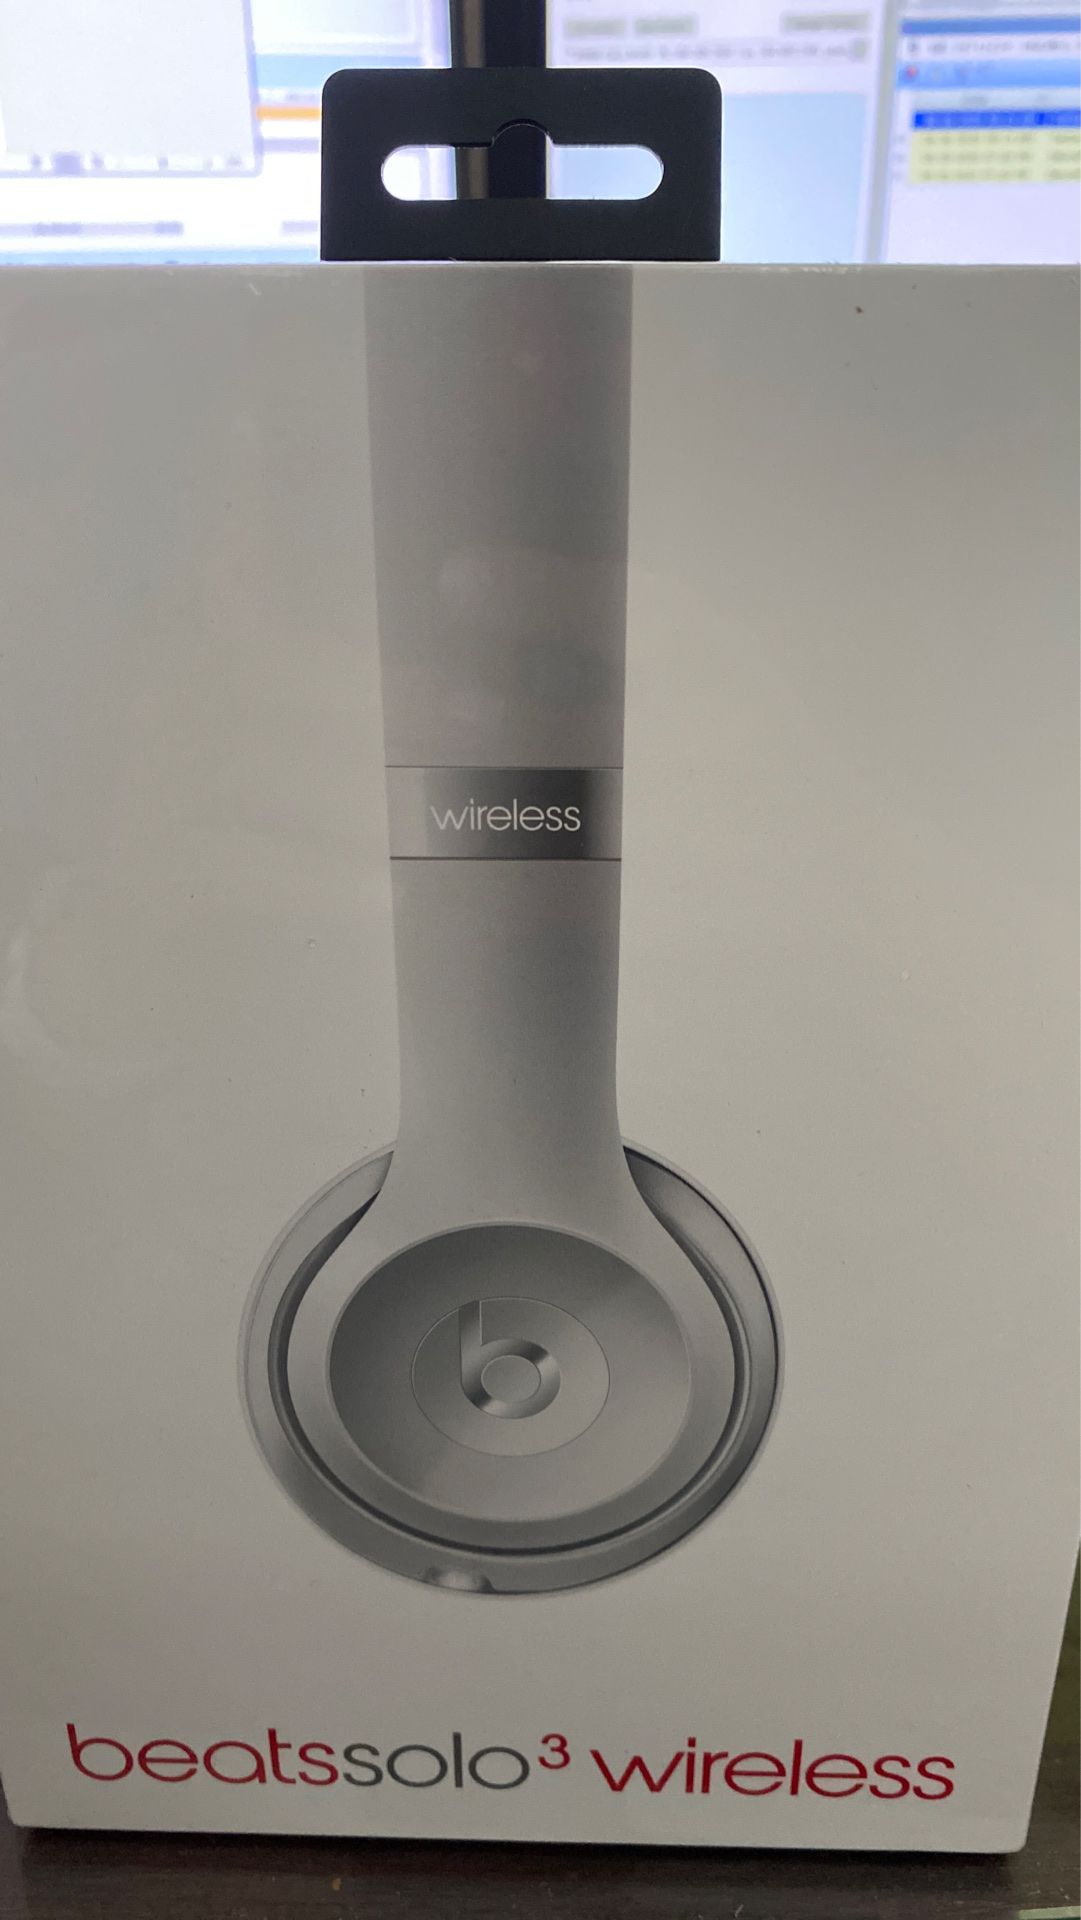 New BEATS SOLO 3 wireless headphones - SILVER